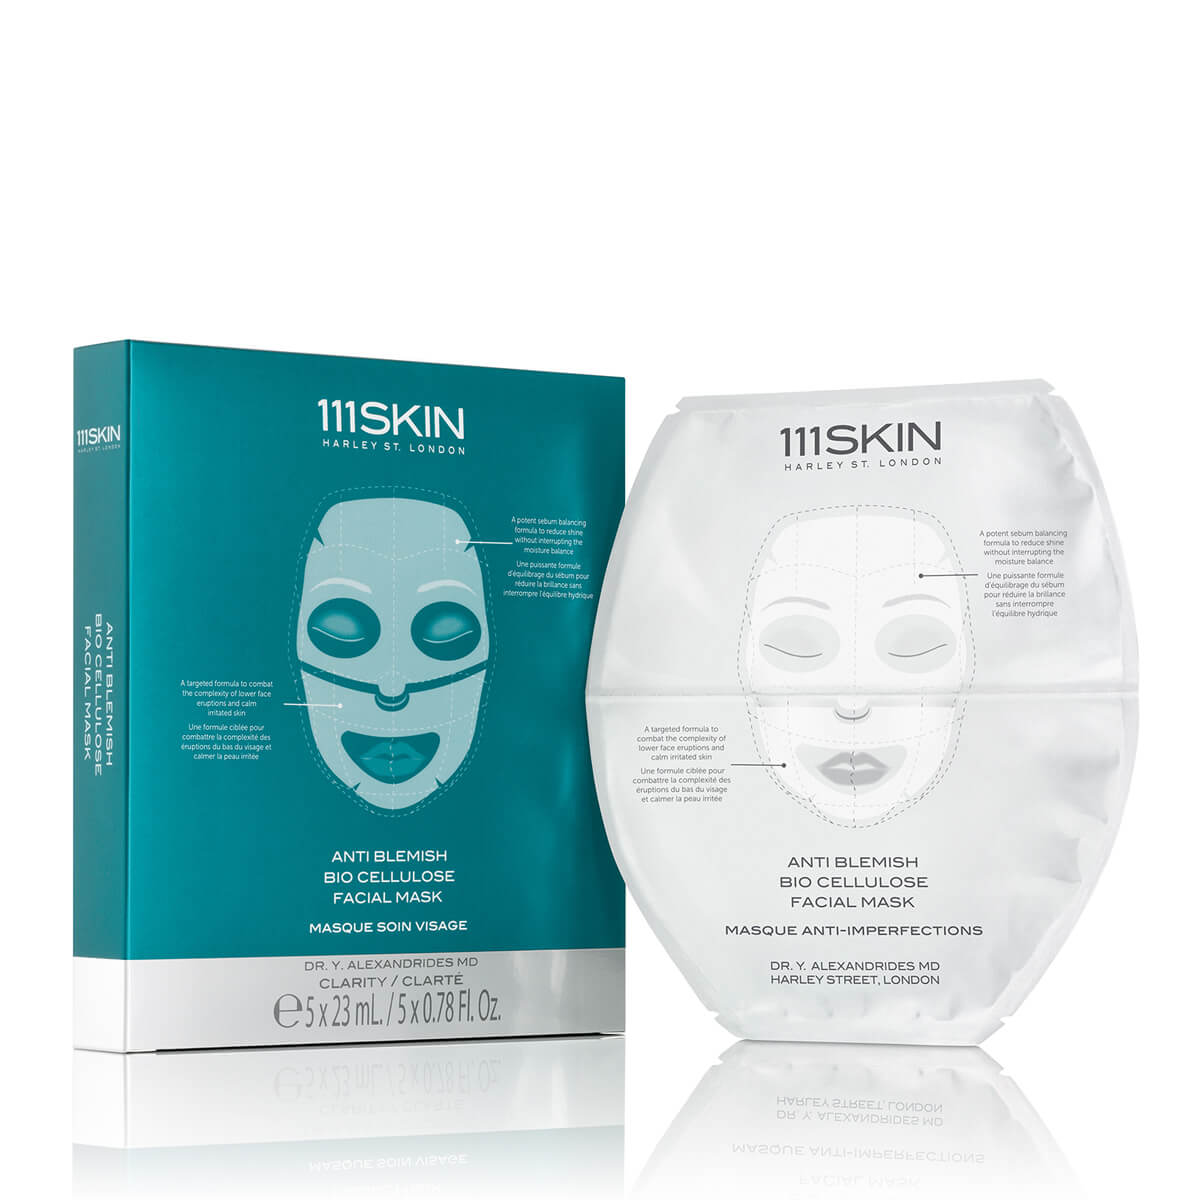 111 skin Anti Blemish Bio Cellulose Facial Mask Box and Sachet